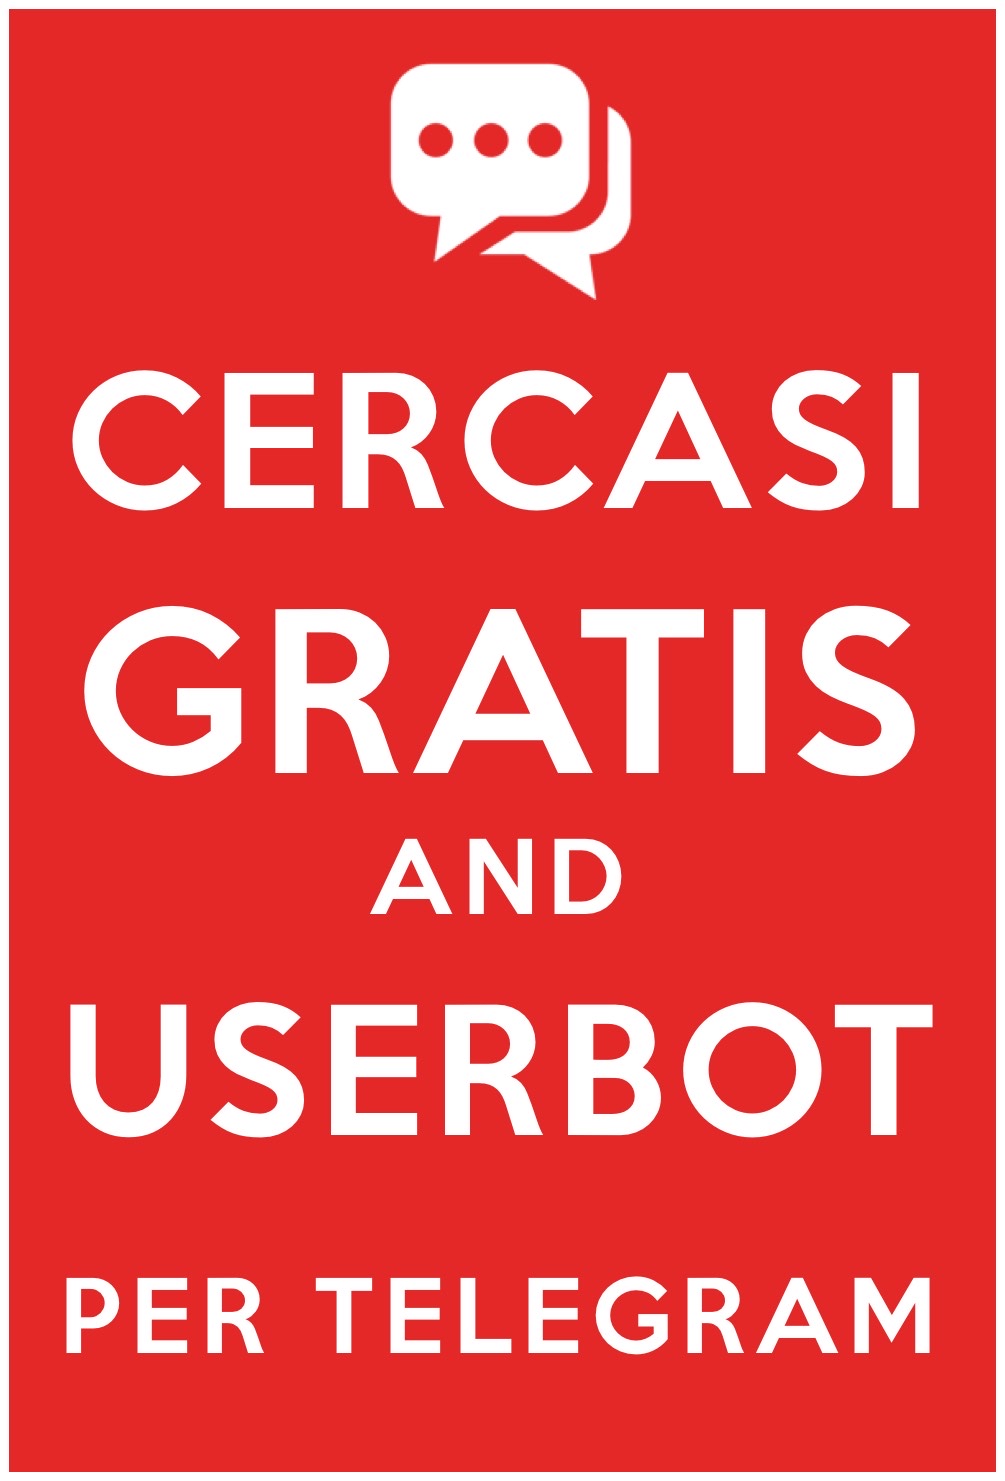 Cercasi “Userbot”